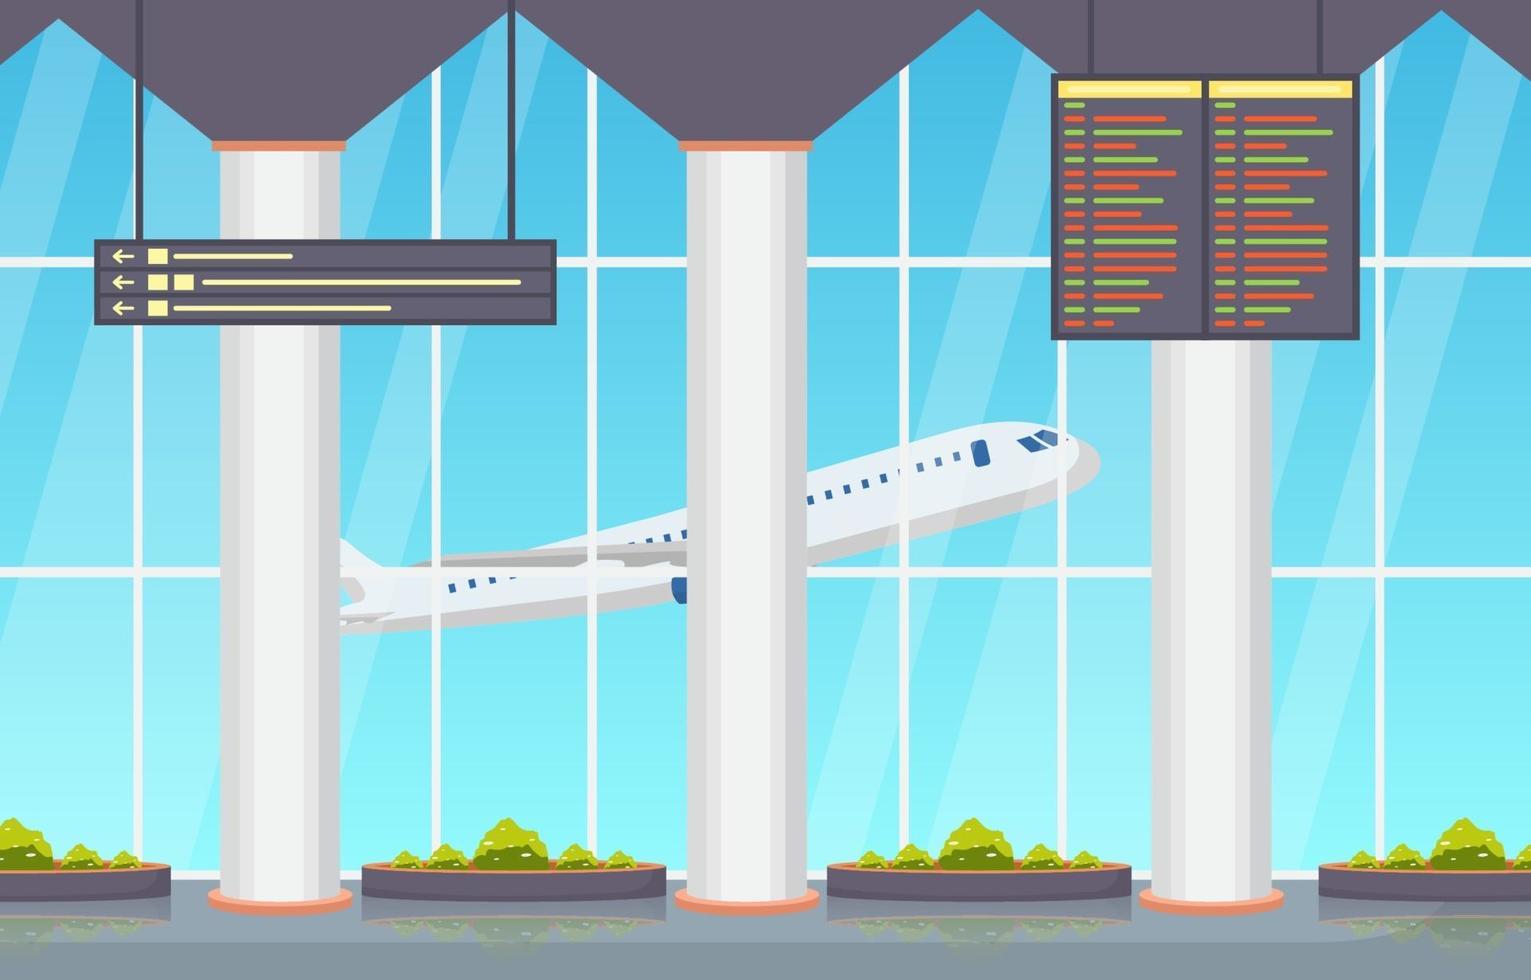 Flughafen Flugzeug Terminal Gate Ankunft Abflughalle Innen flache Illustration vektor